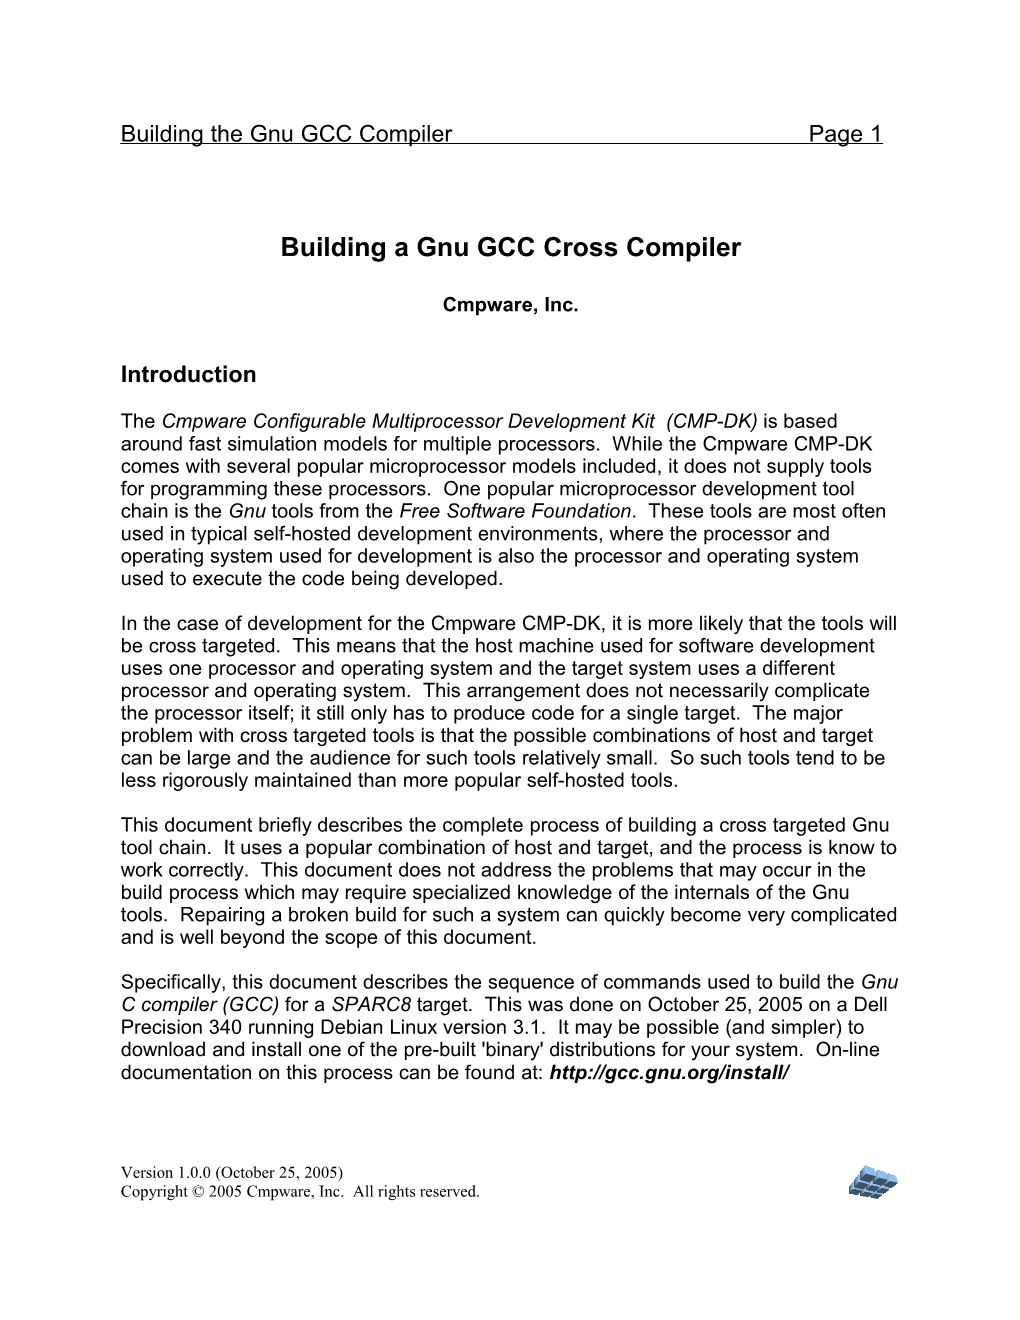 Building a GCC Cross Compiler